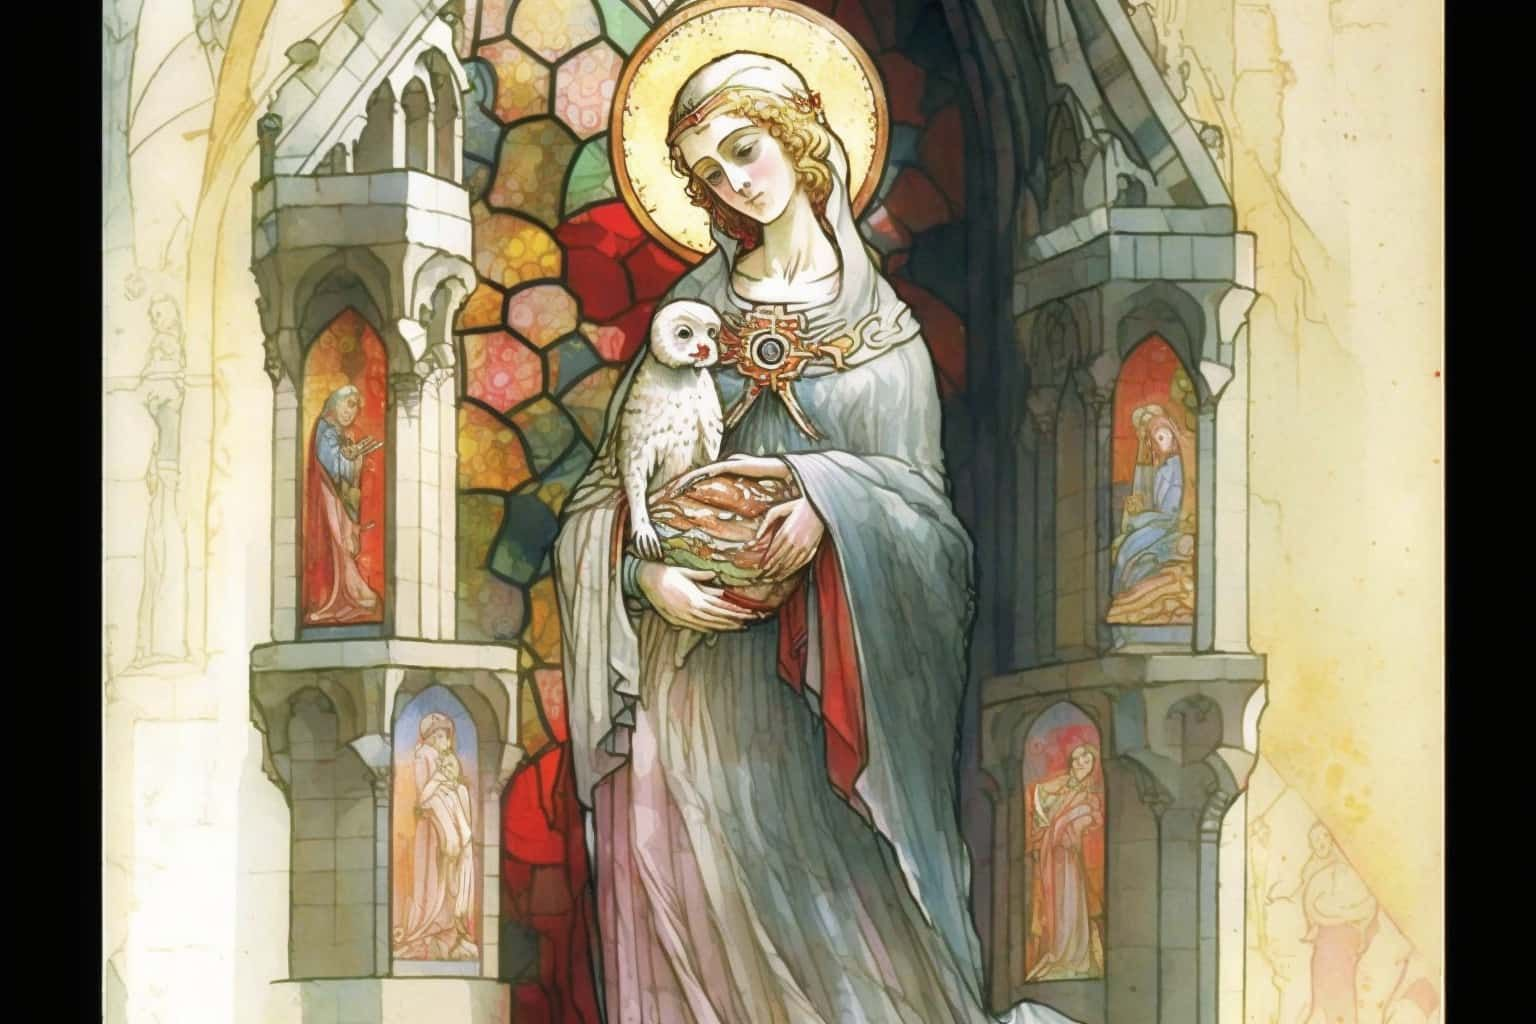 St. Hedwig image